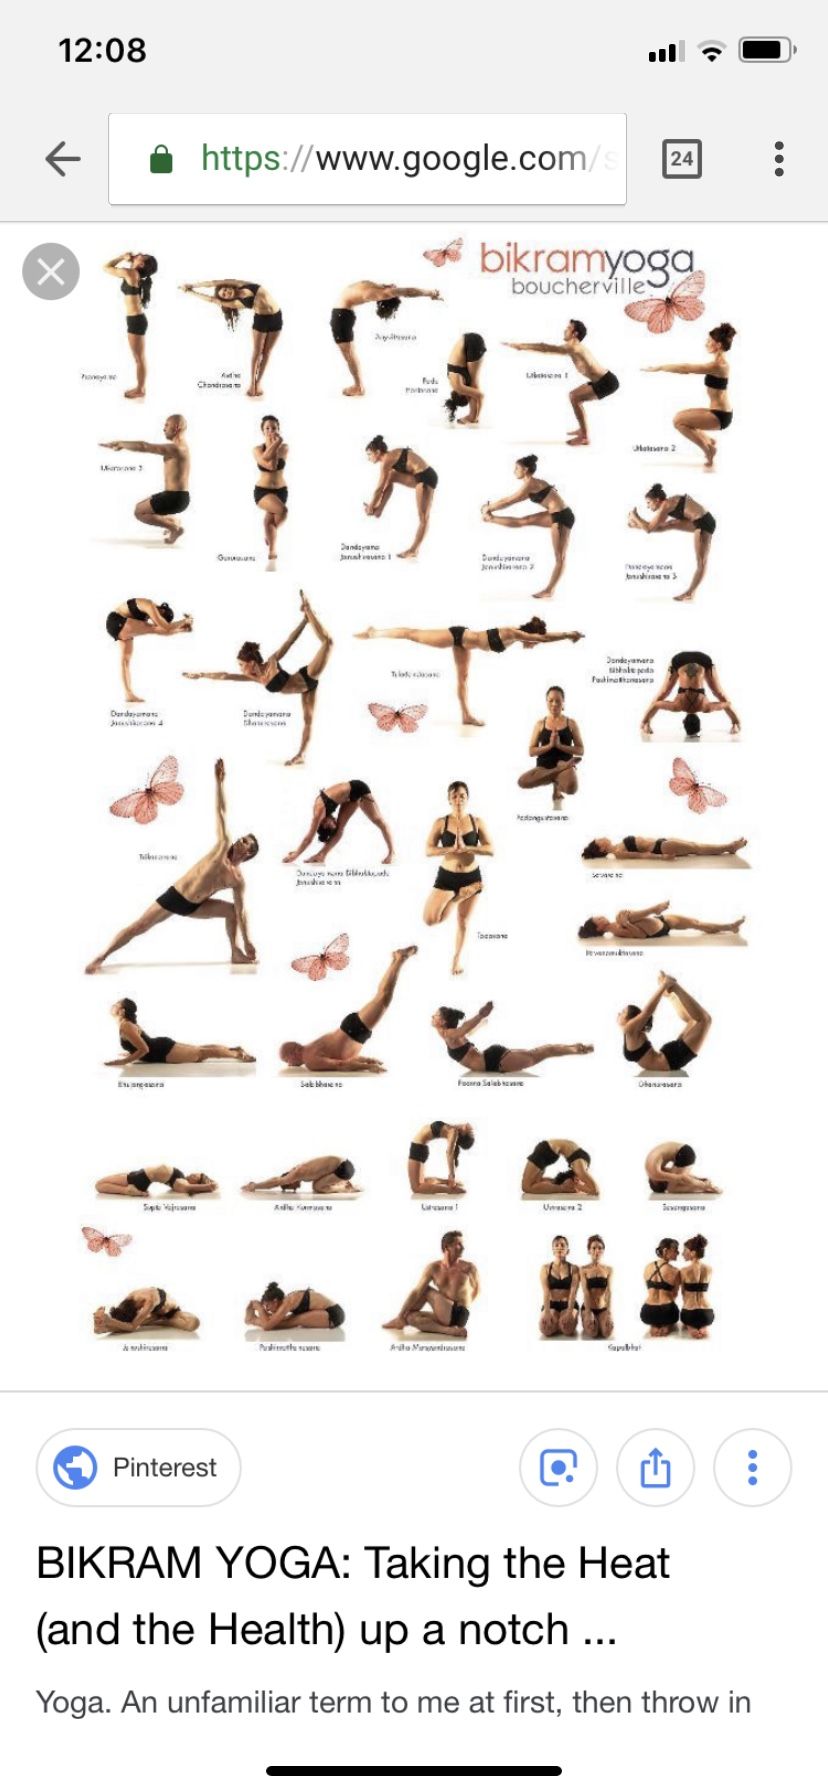 Bikram yoga classes at Reston studio